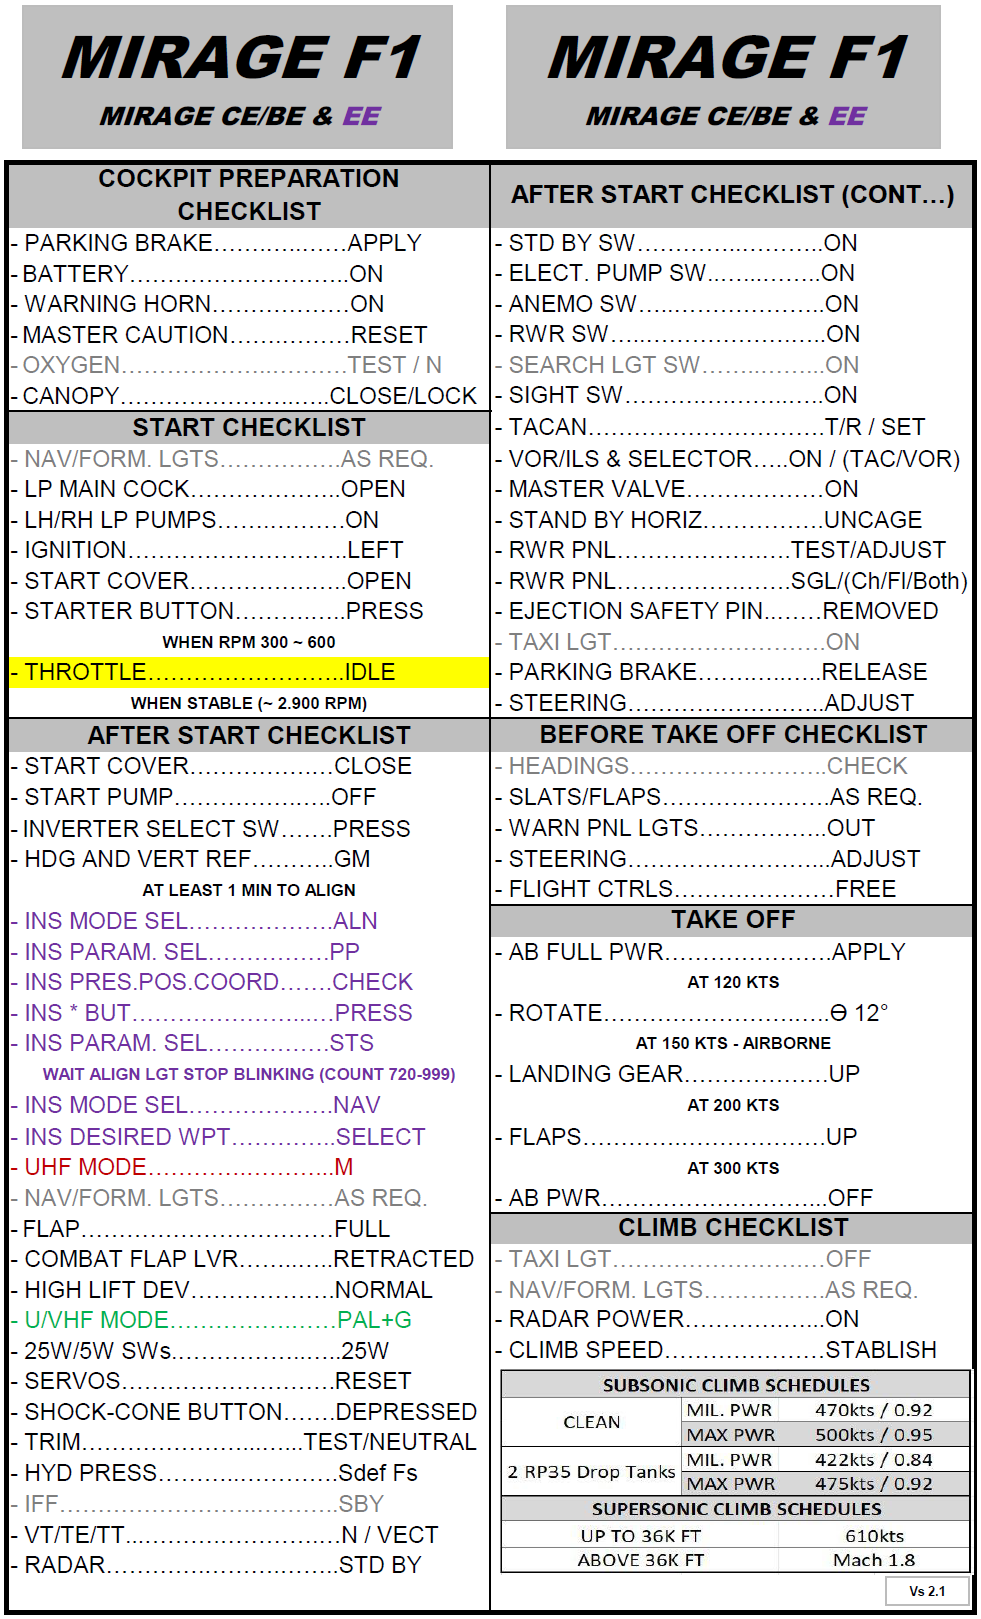 Mirage F1CE/BE & EE Quick Checklist. (Update vs 2.1)